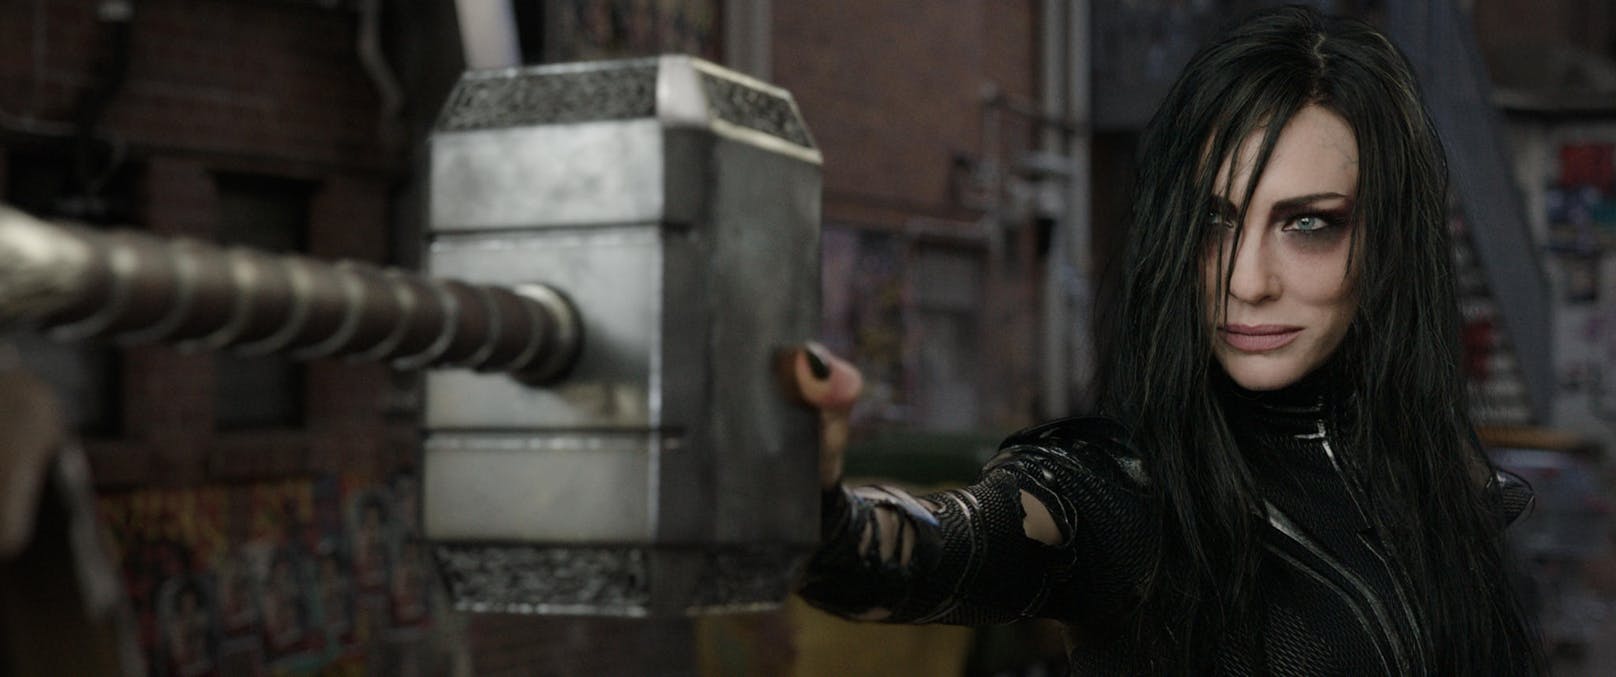 Cate Blanchett als Hela in "Thor: Ragnarok"